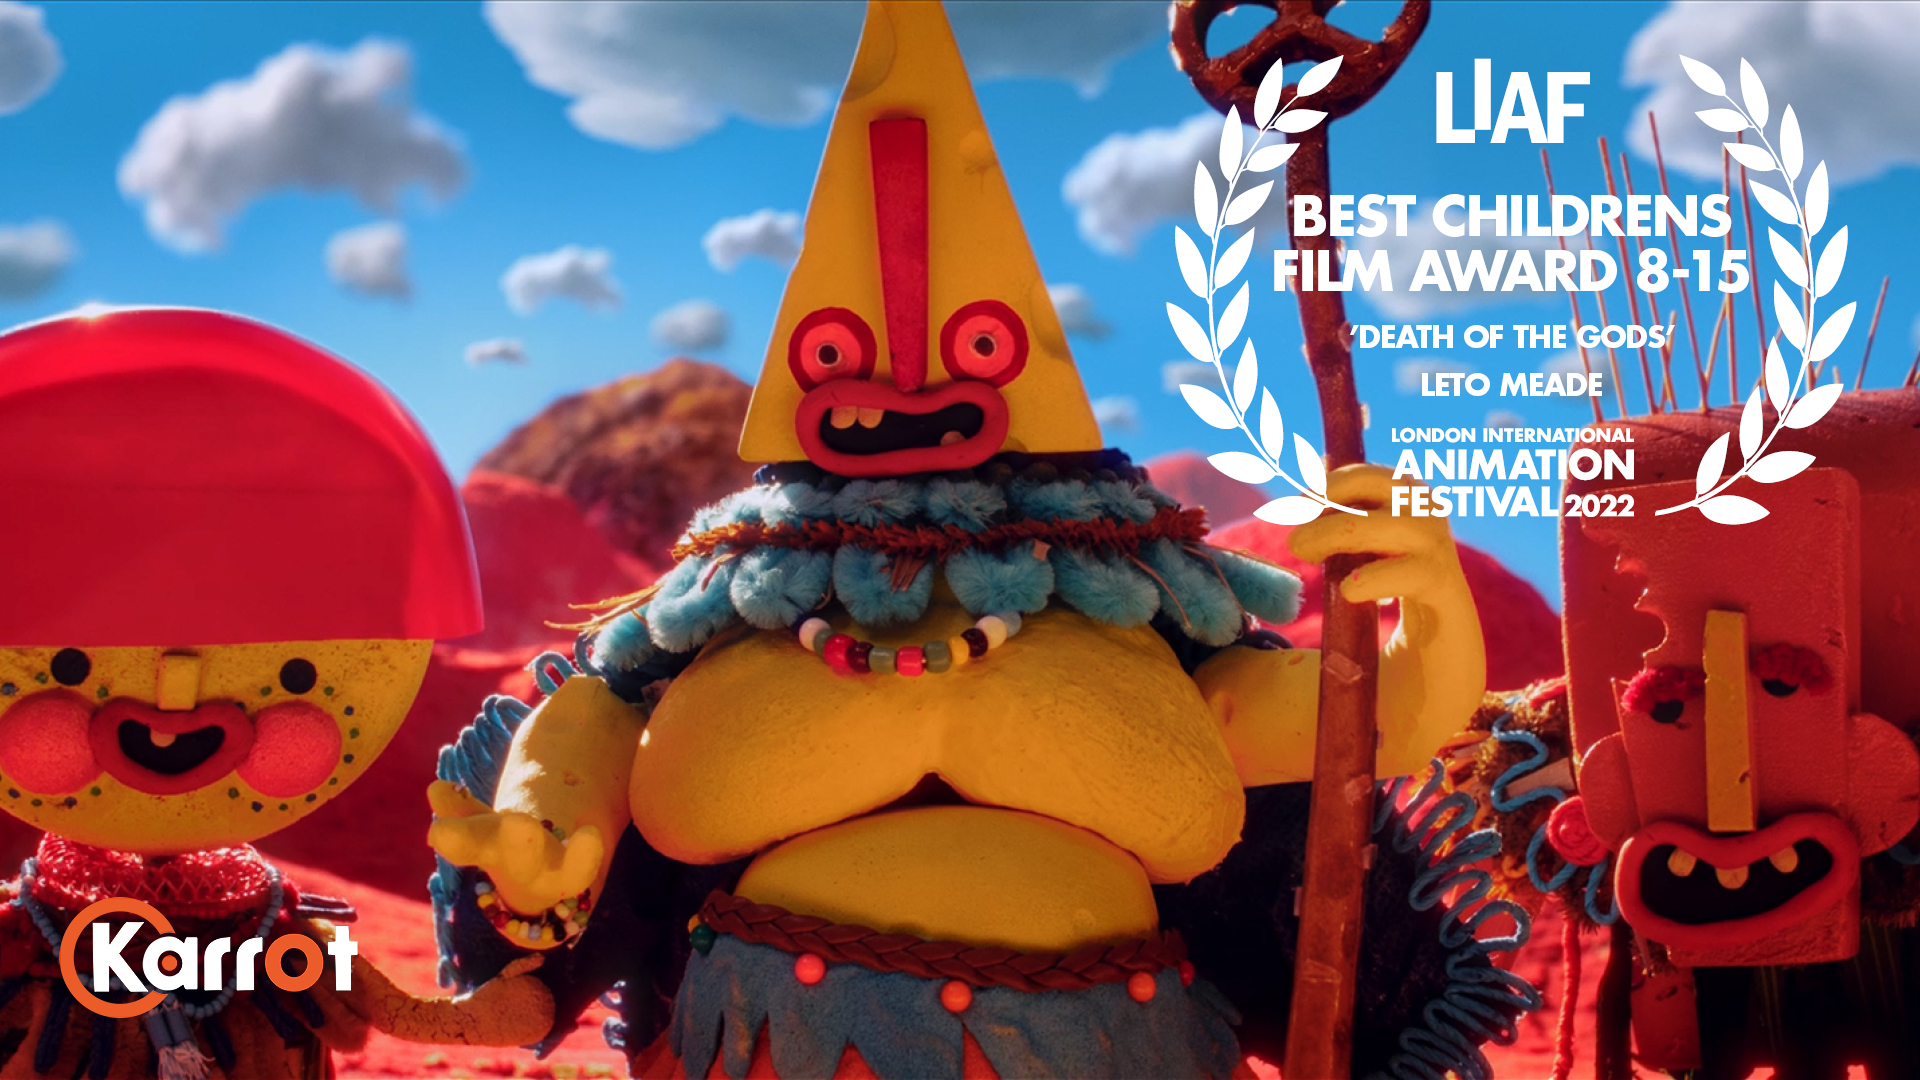 LIAF, London International Animation Festival, Death of the Gods, Leto Meade